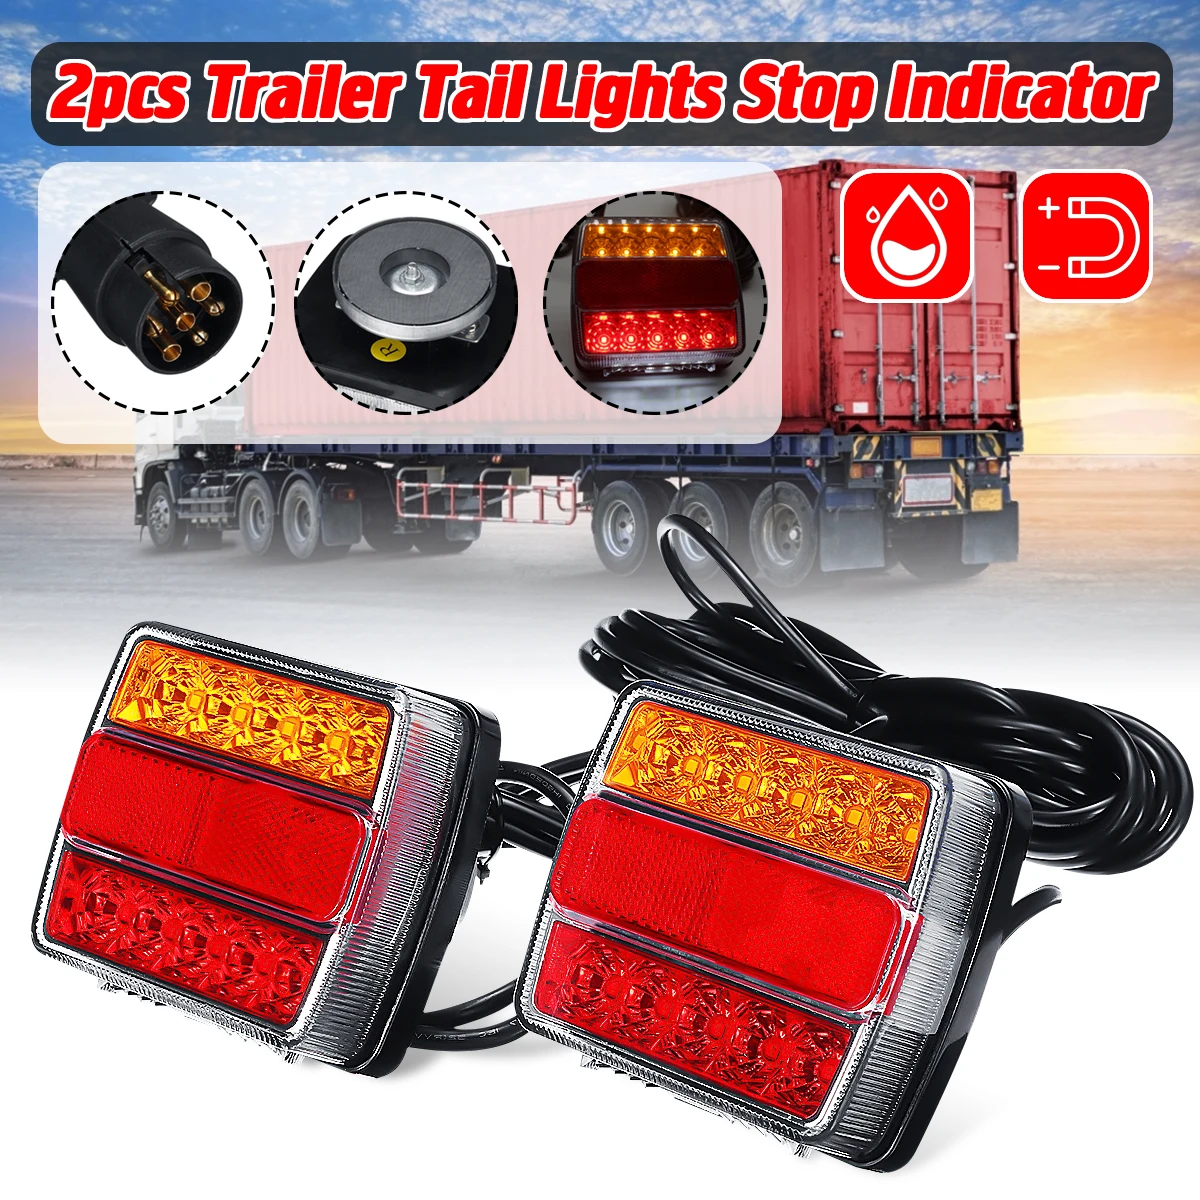 2x Rear Towing Tail Lights 12V 10m Line 7 Pin Kit Universal Brake Stop Indicator Lamp License Number Plate Waterproof Reflector